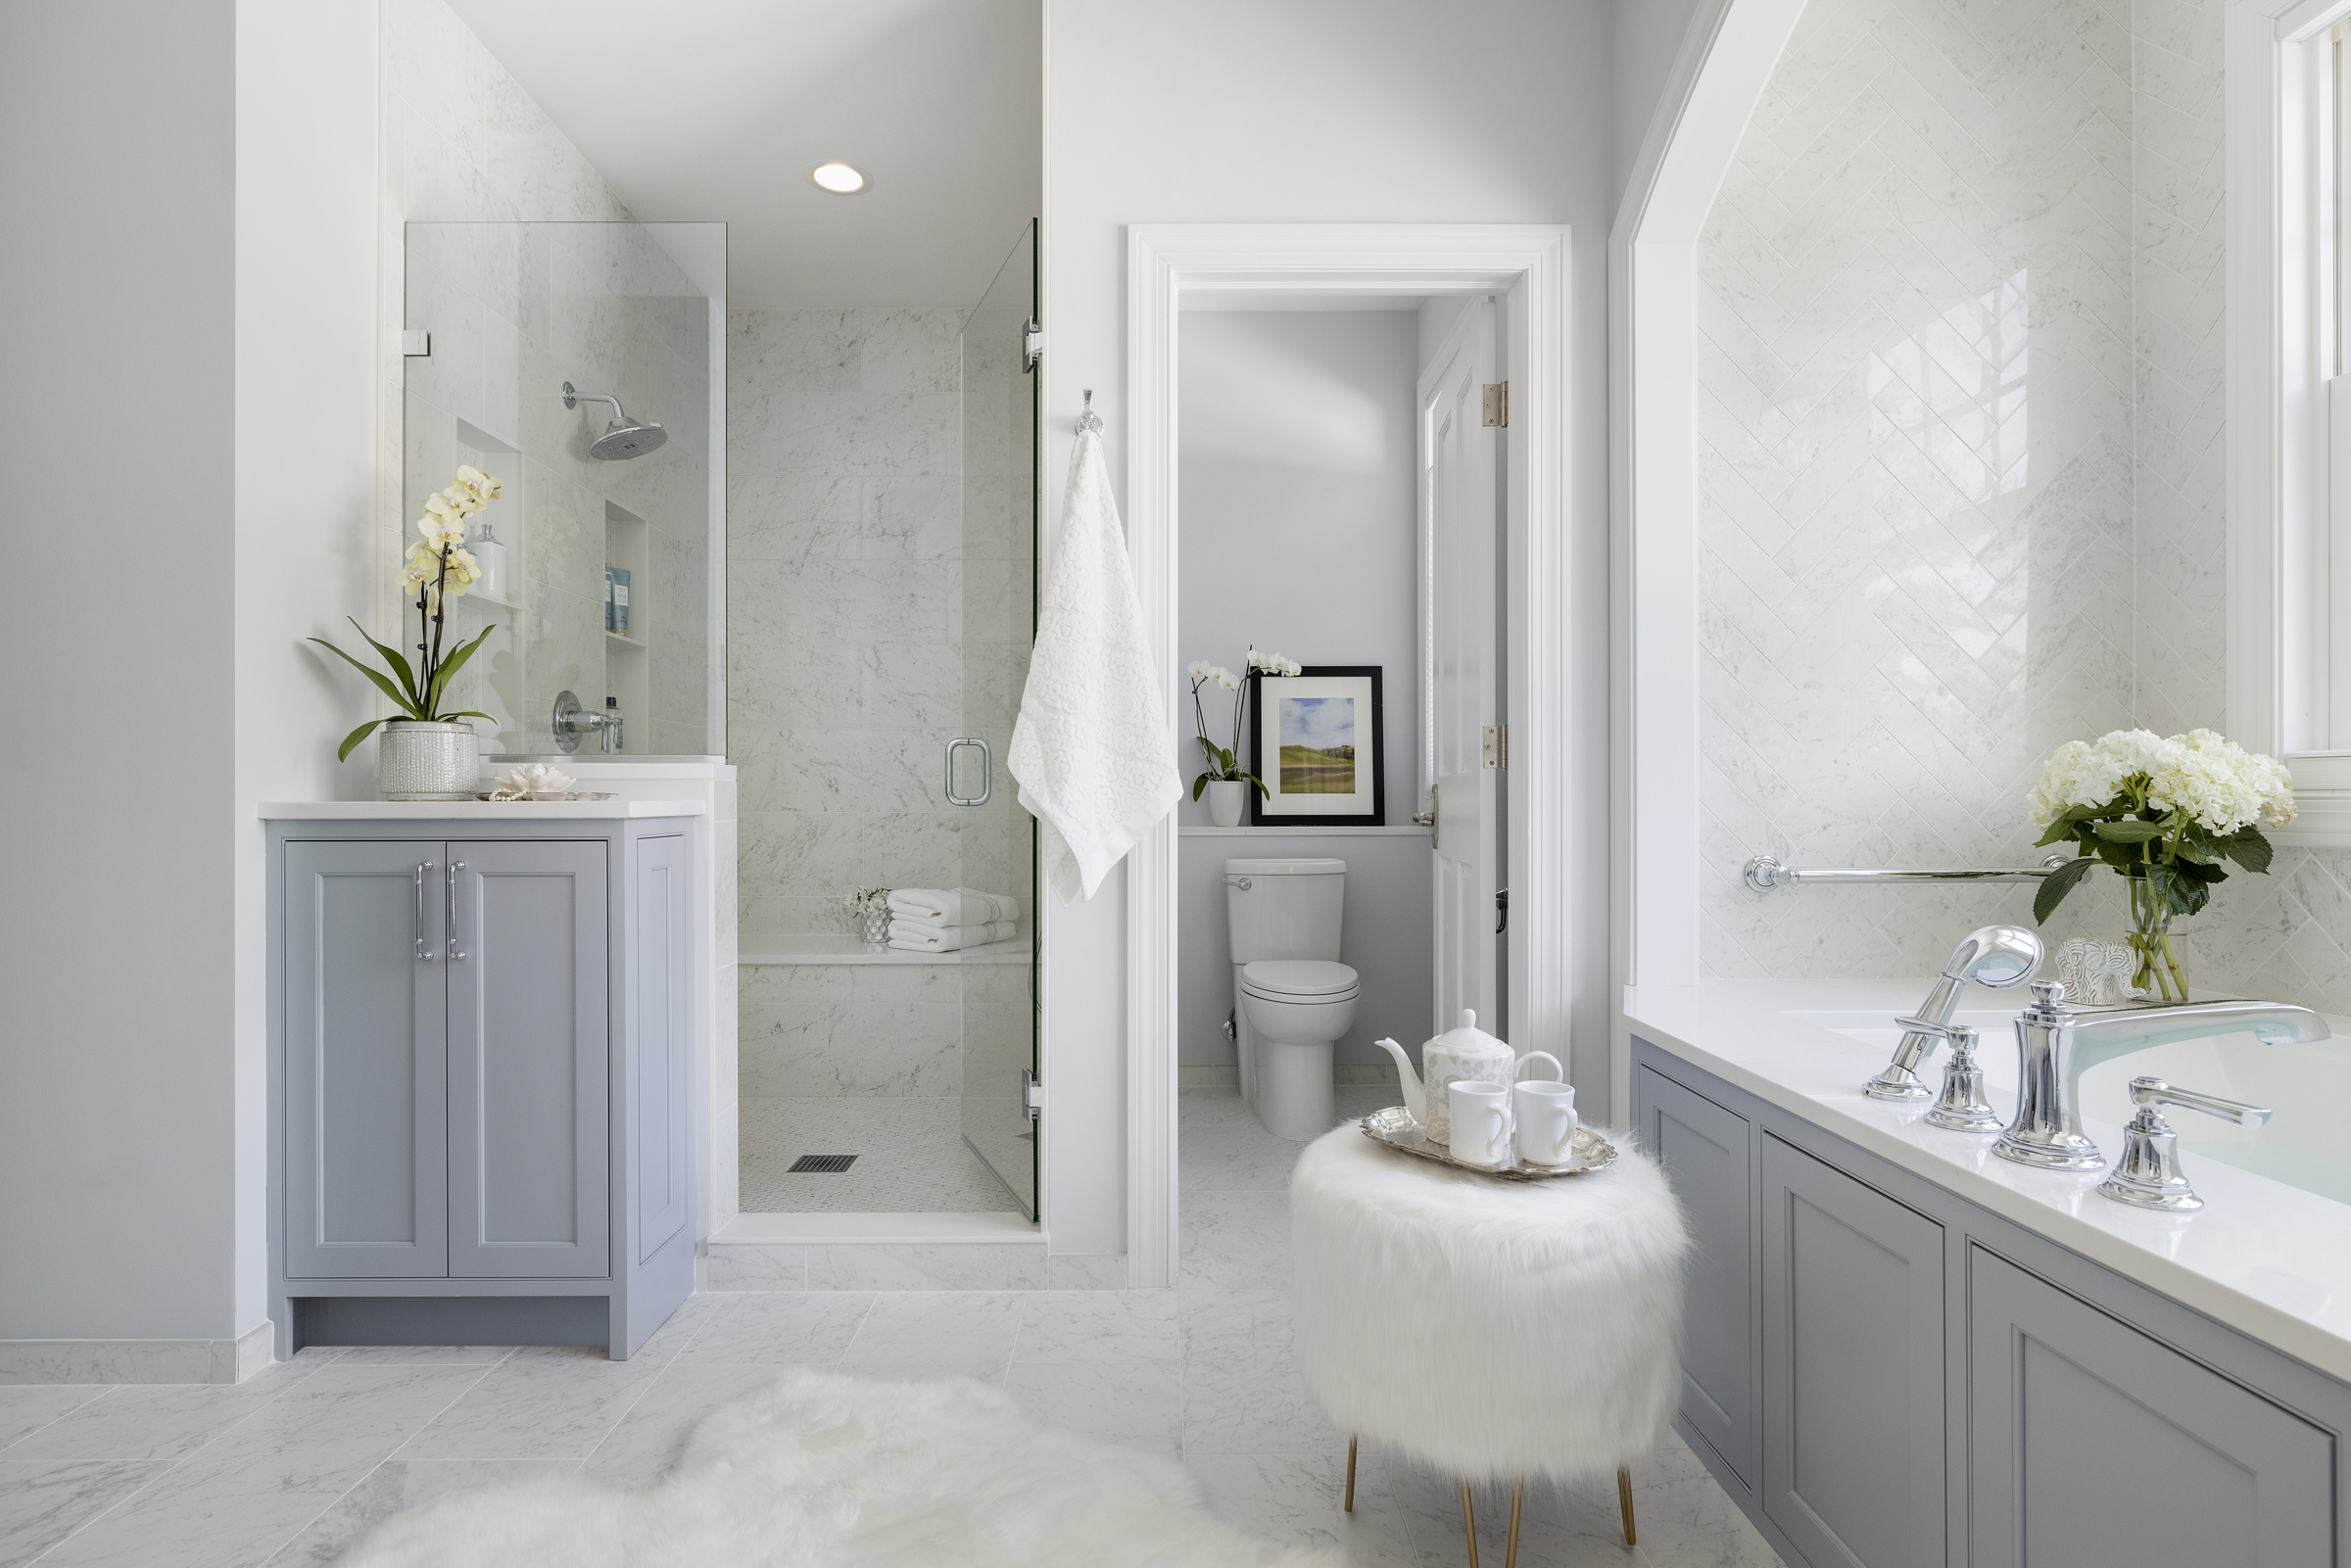 European inspired bathroom remodel with light blue vanity and white tile floor